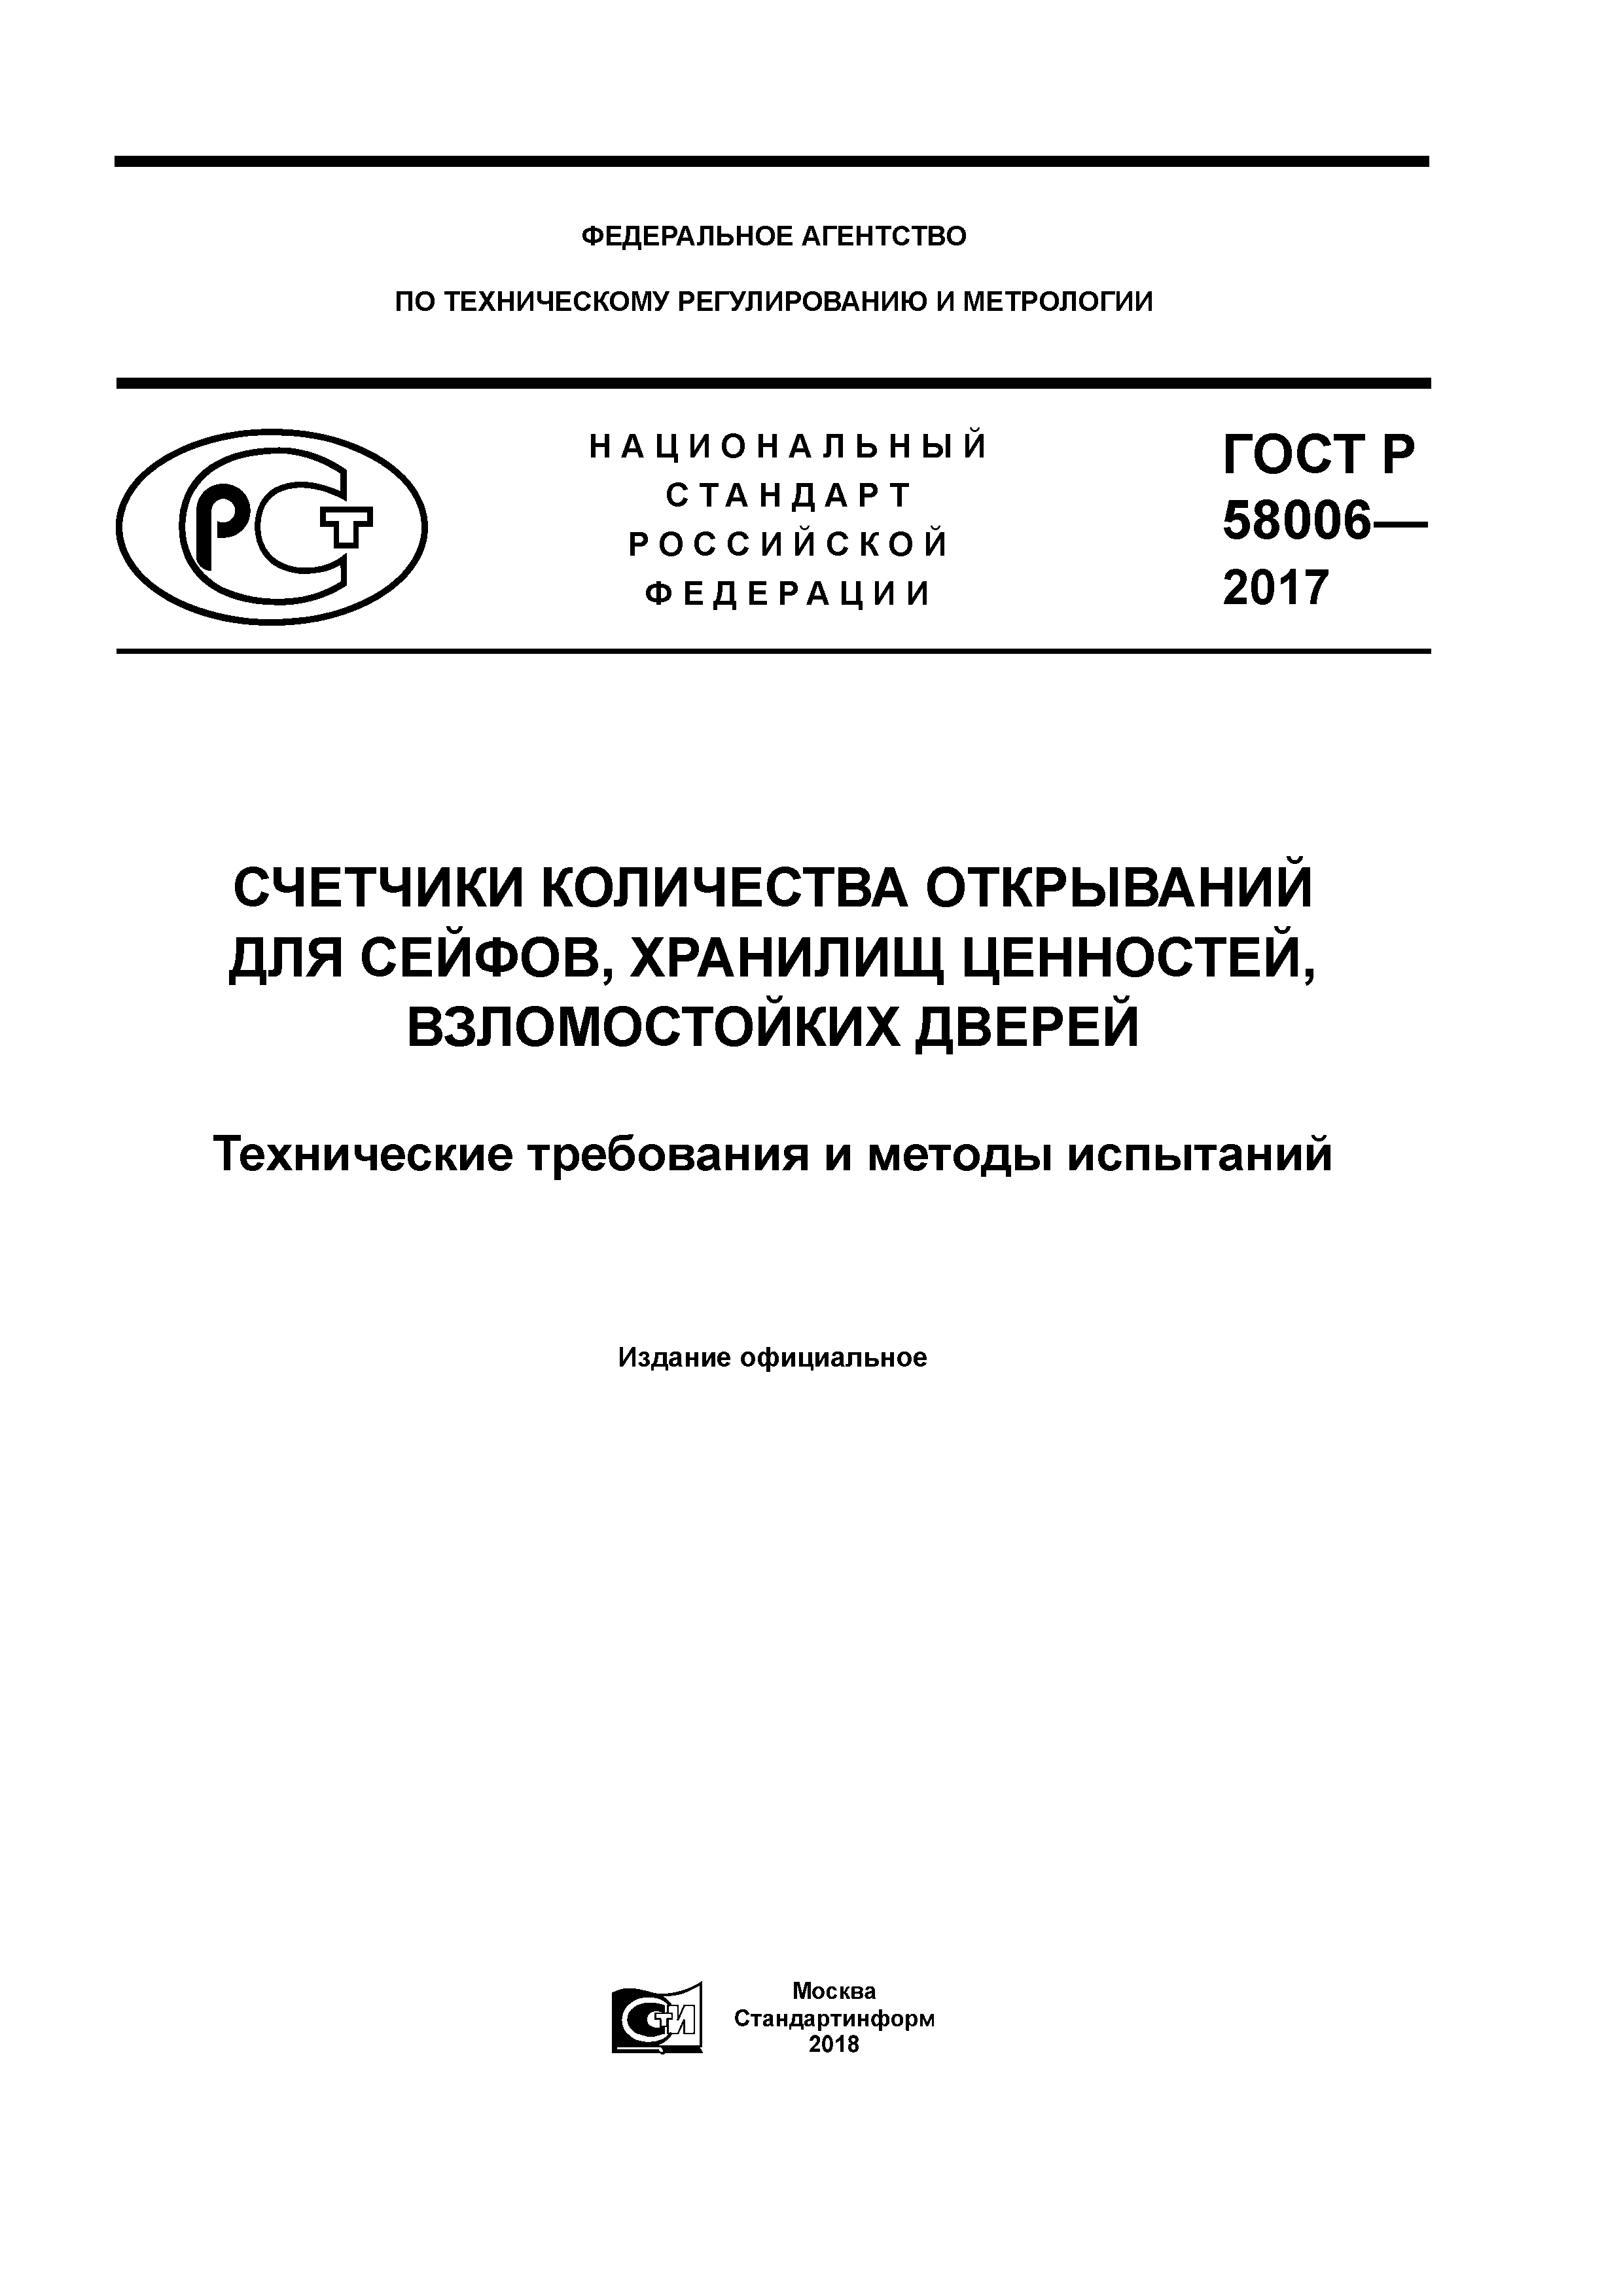 ГОСТ Р 58006-2017